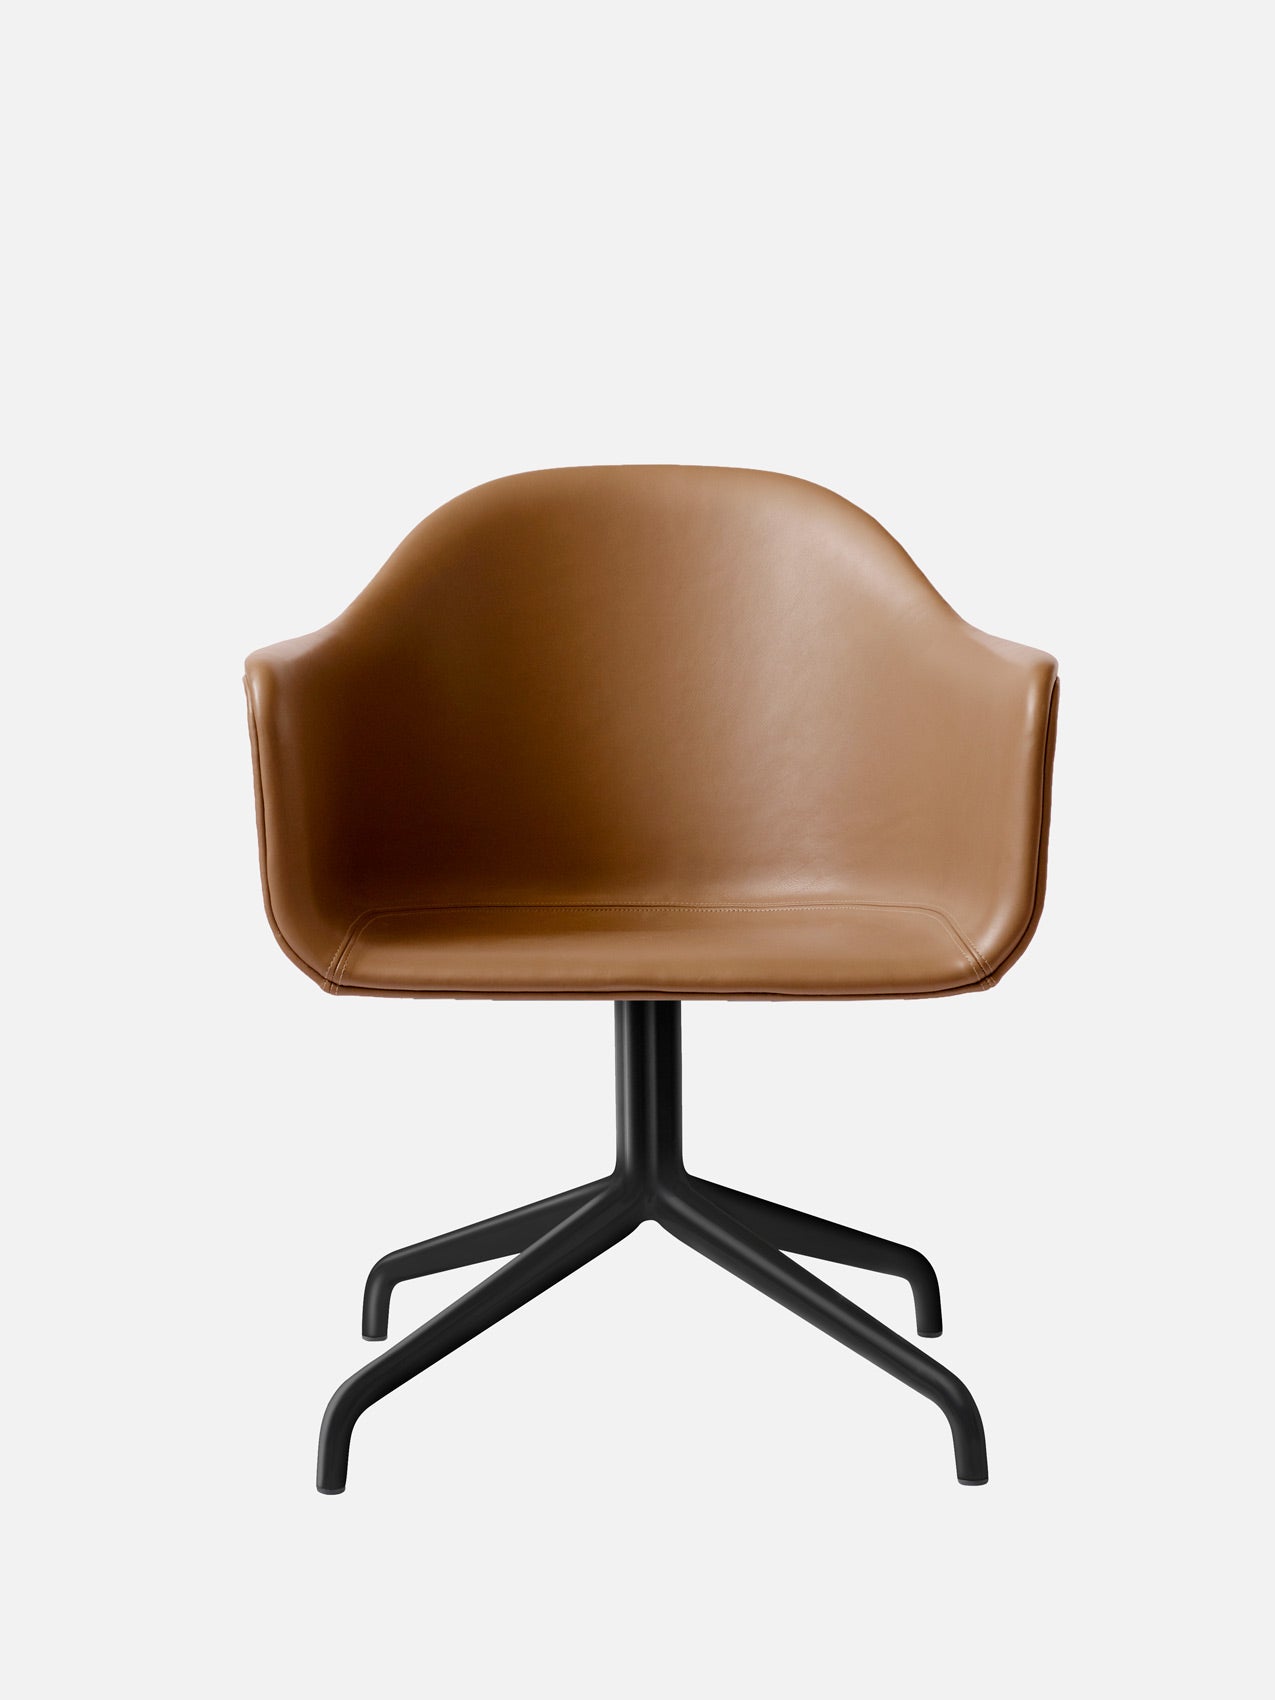 Harbour Arm Chair, Upholstered-Chair-Norm Architects-Star Base (Seat 17.7in H)/Black Steel-0250 Cognac/Dakar-menu-minimalist-modern-danish-design-home-decor